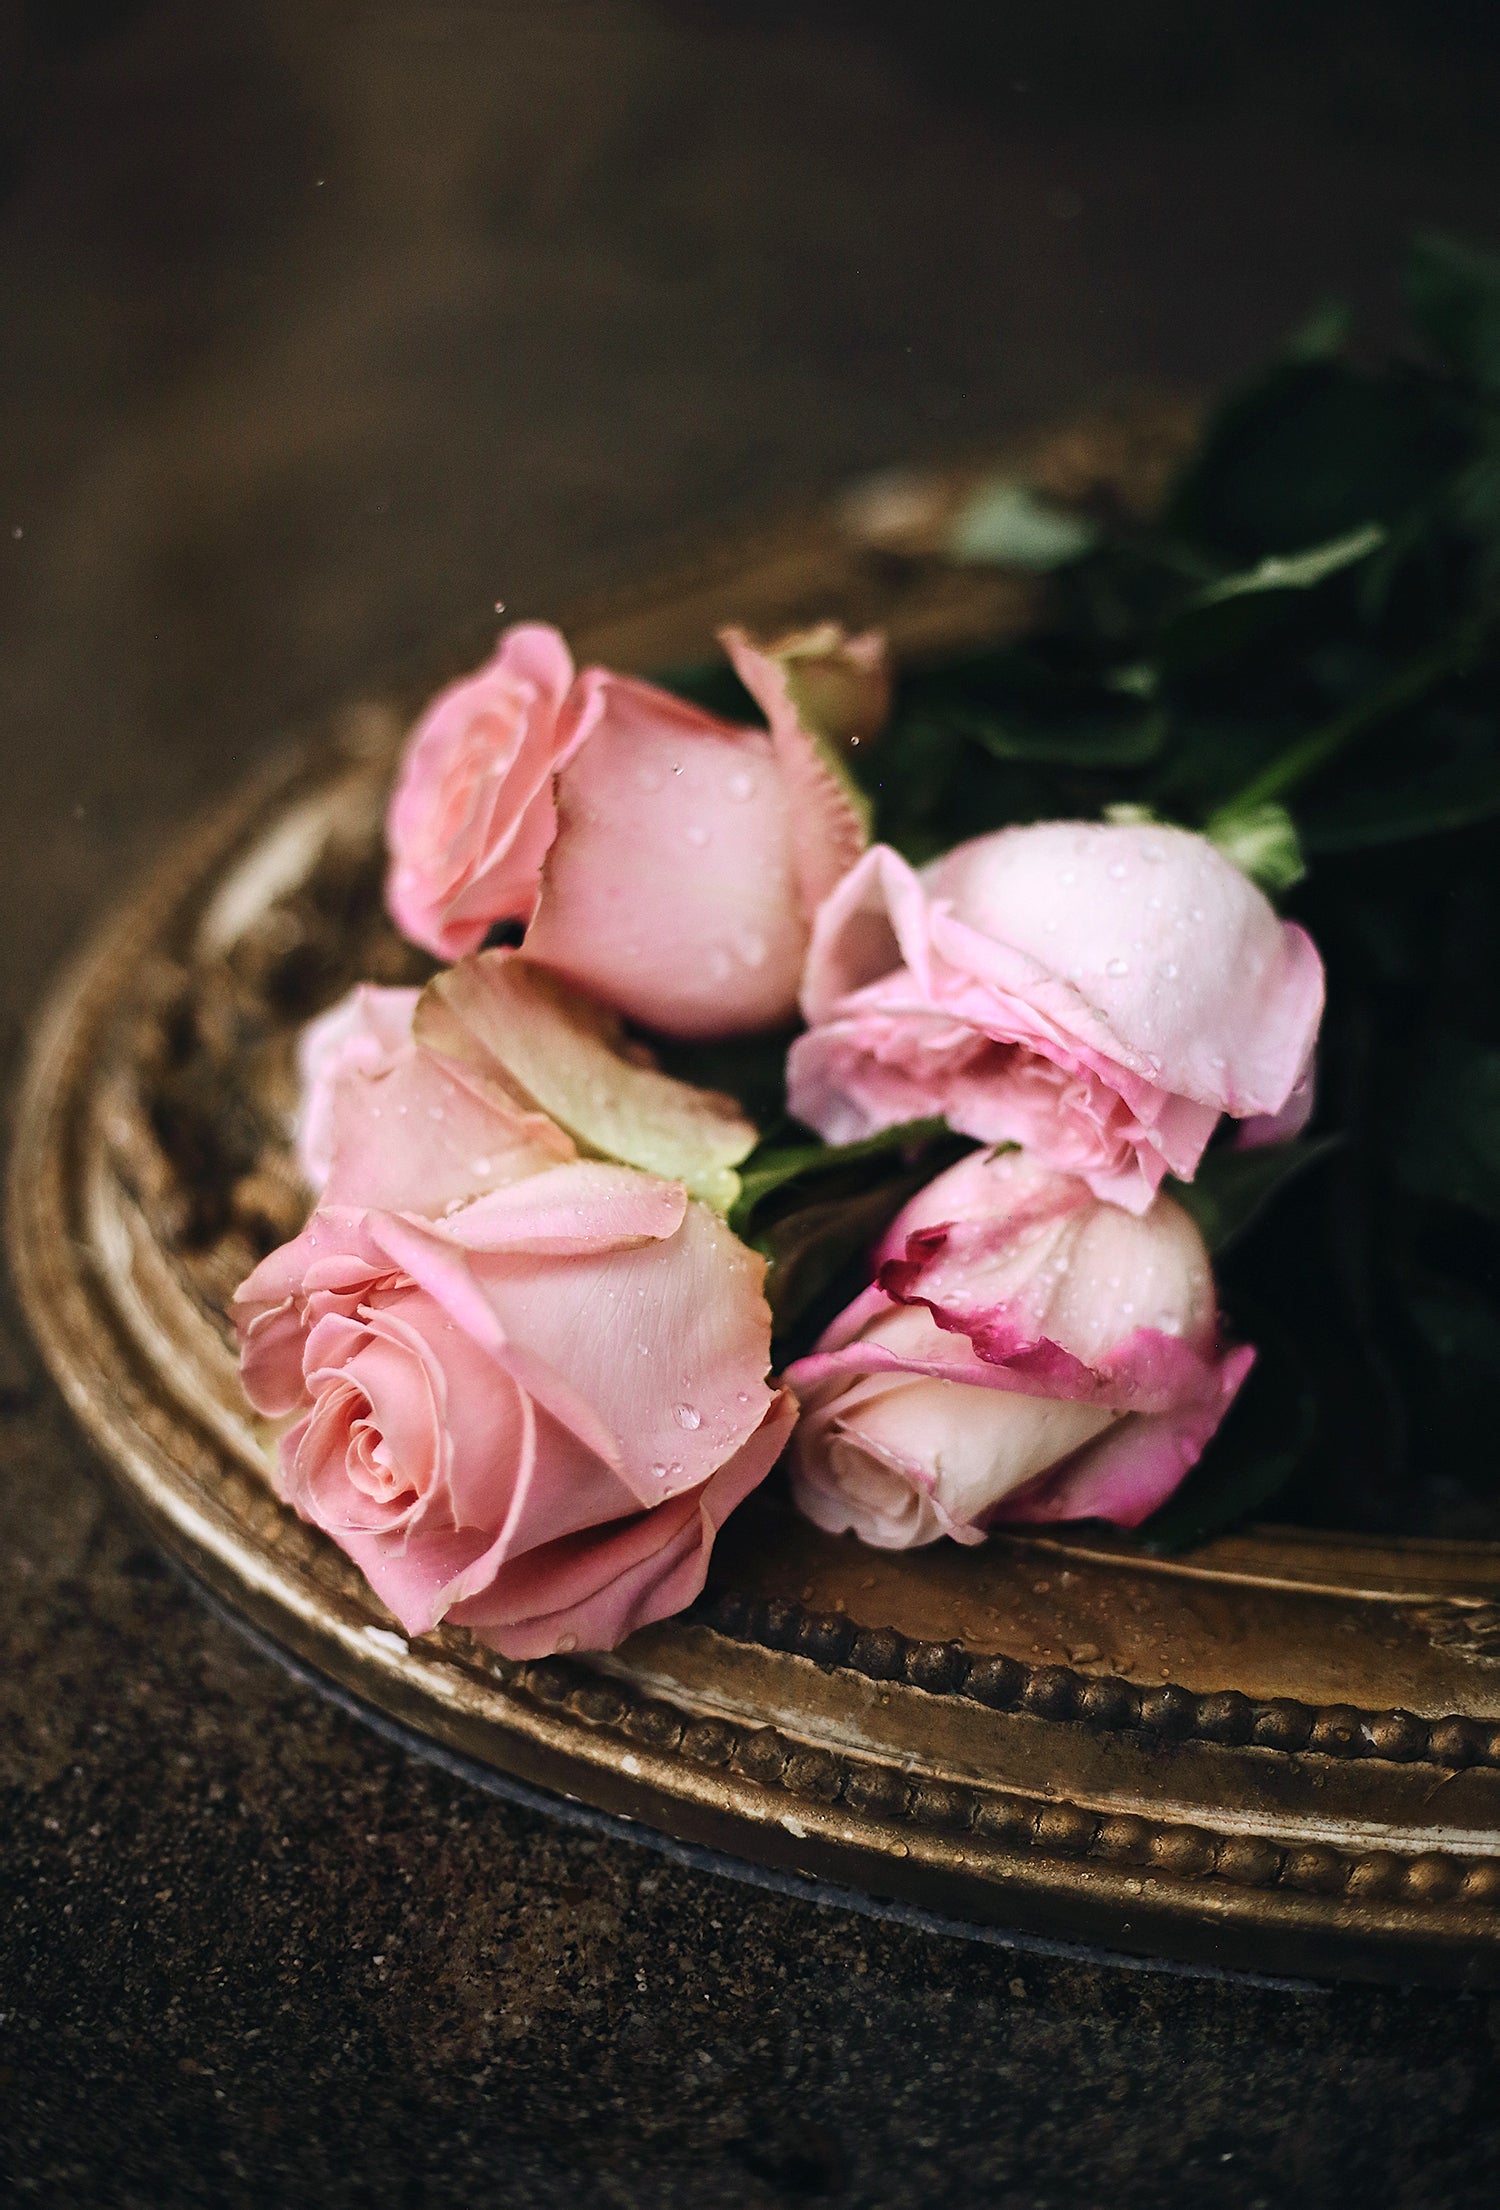 Top 10 MAY ROSE / ROSE DE MAI Fragrances  Rose Centifolia, Grasse Rose,  Cabbage Rose Perfumes 